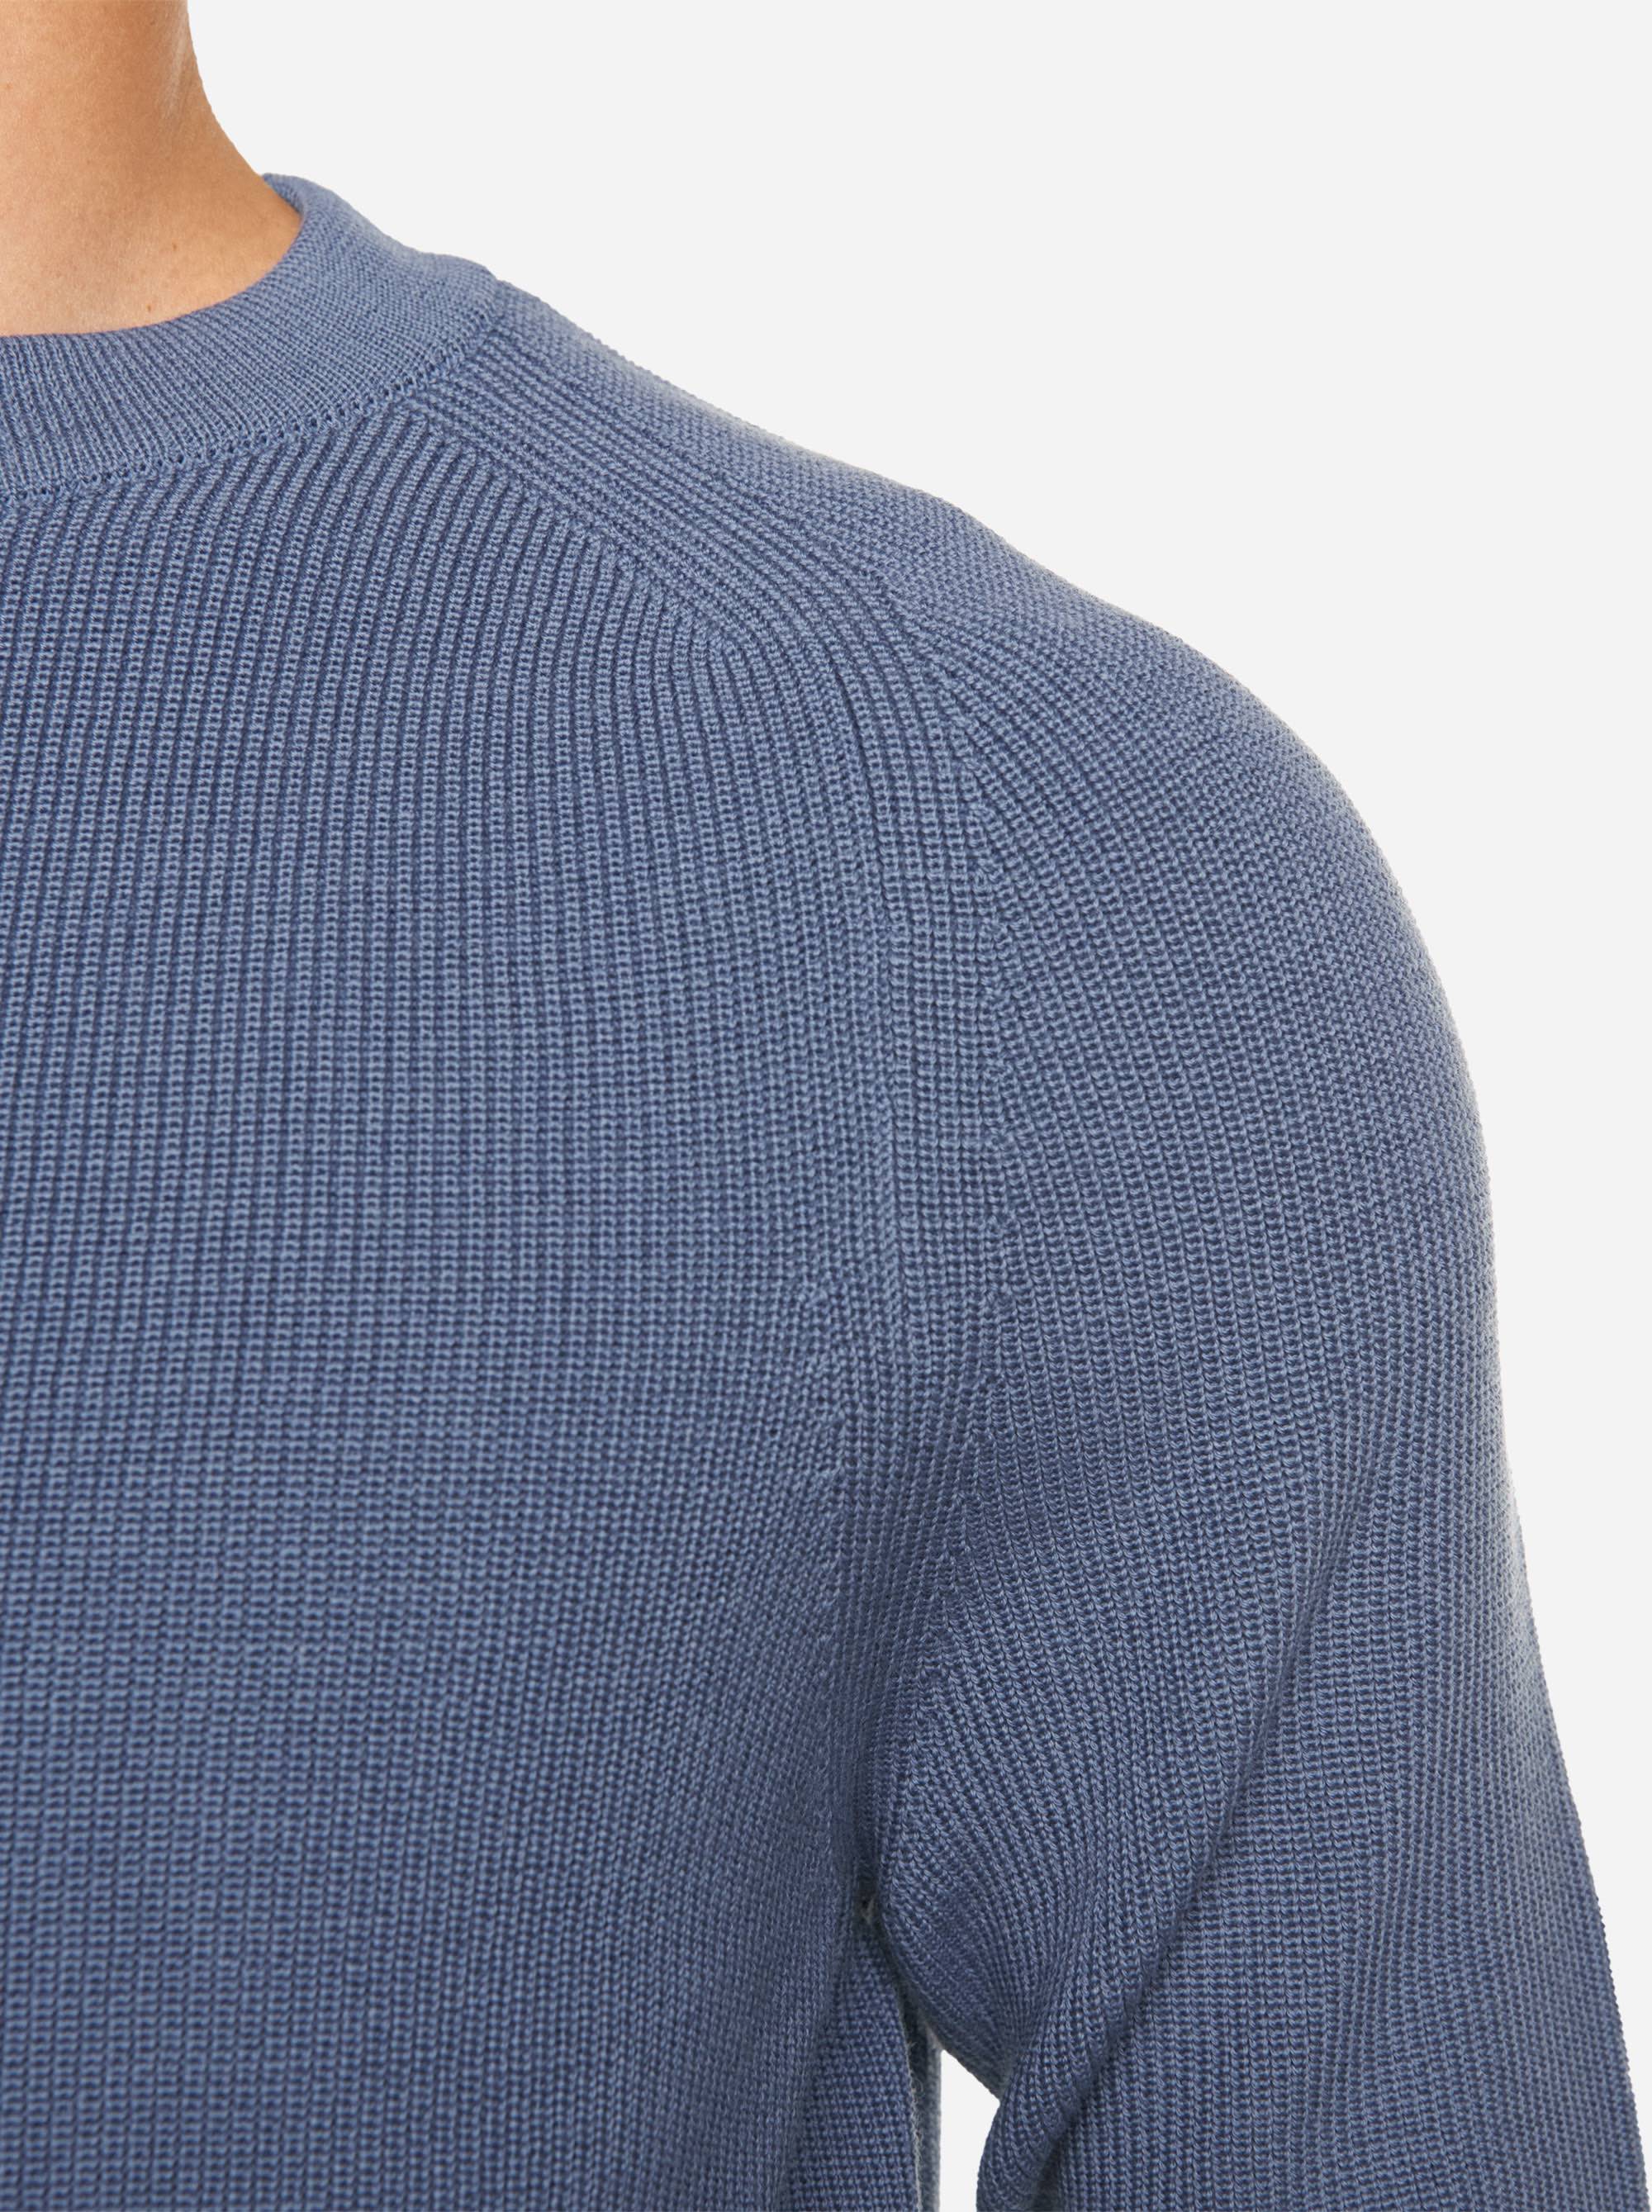 Teym - The Merino Sweater - Men - Sky blue - 3